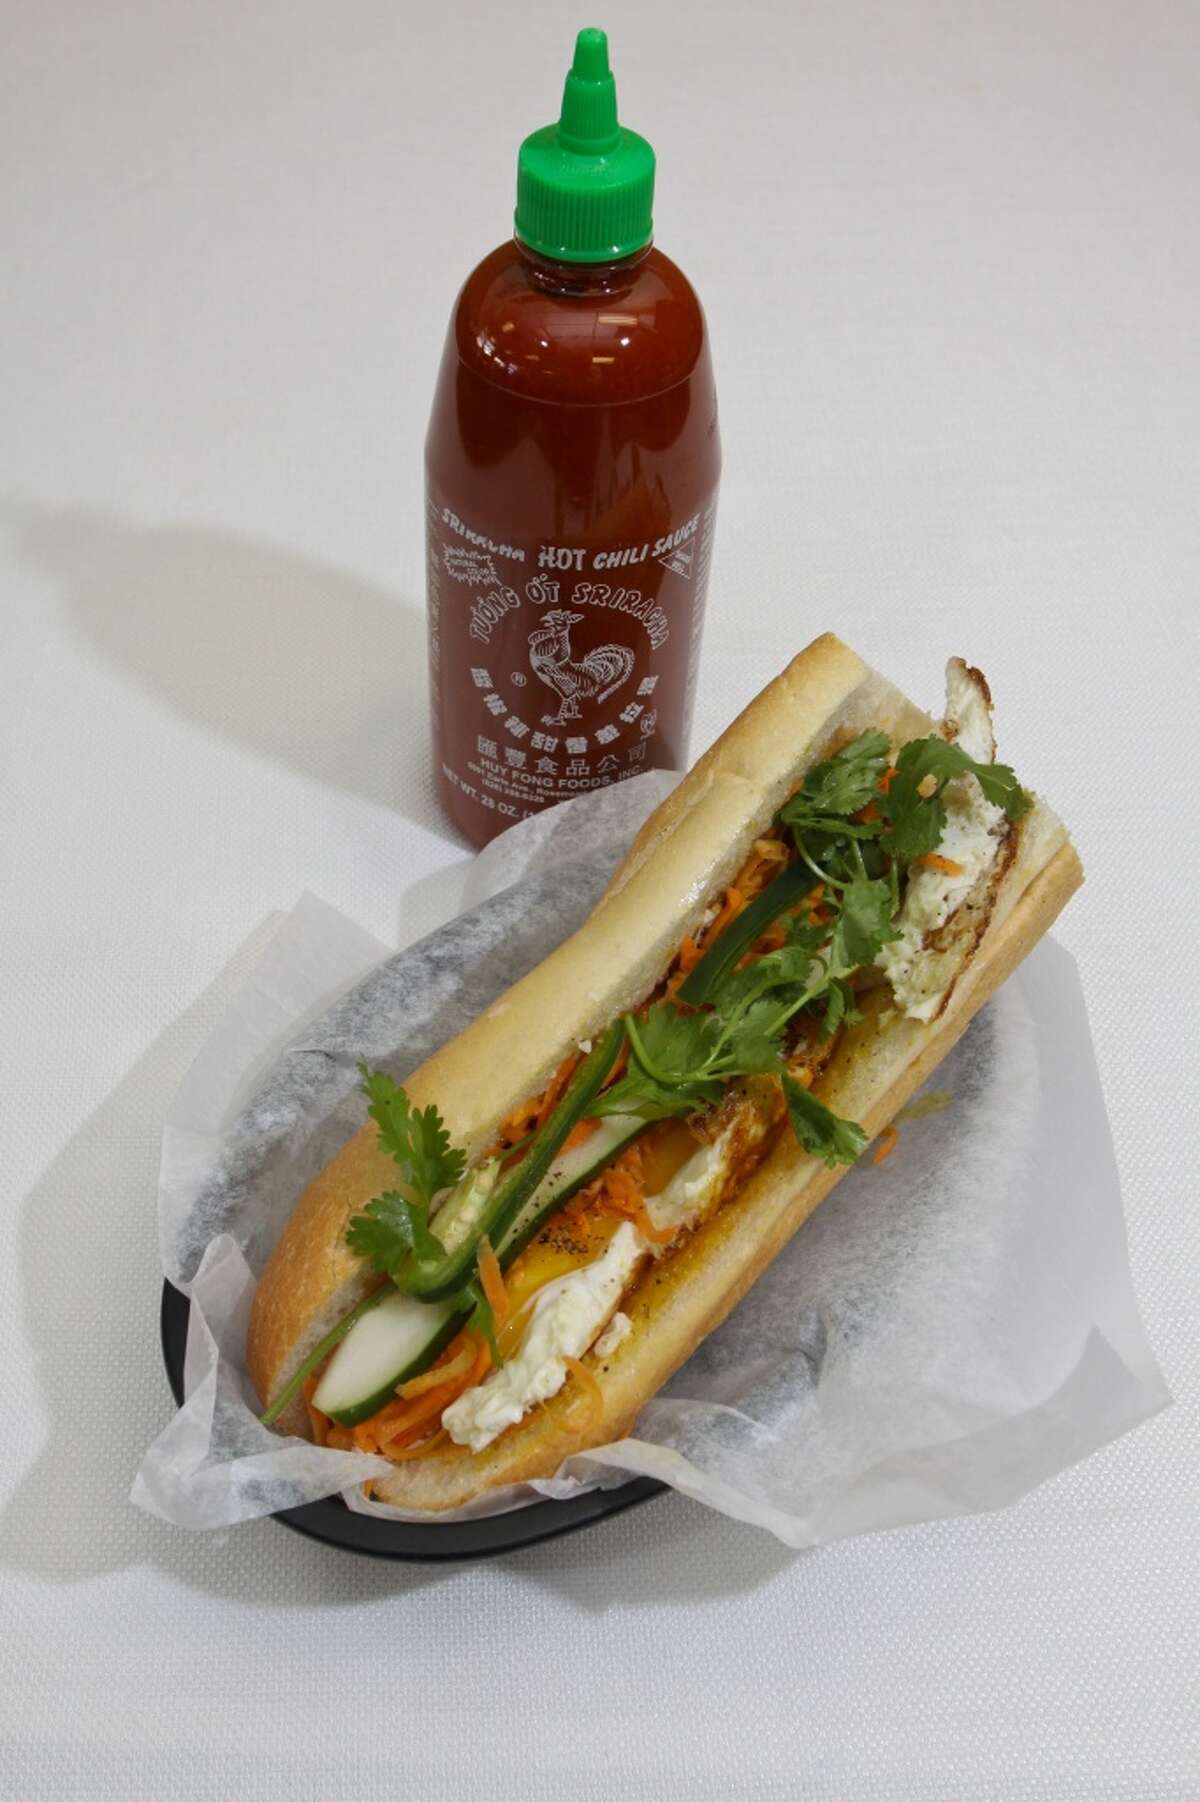 Egg sandwich and Sriracha sauce at Cafe TH